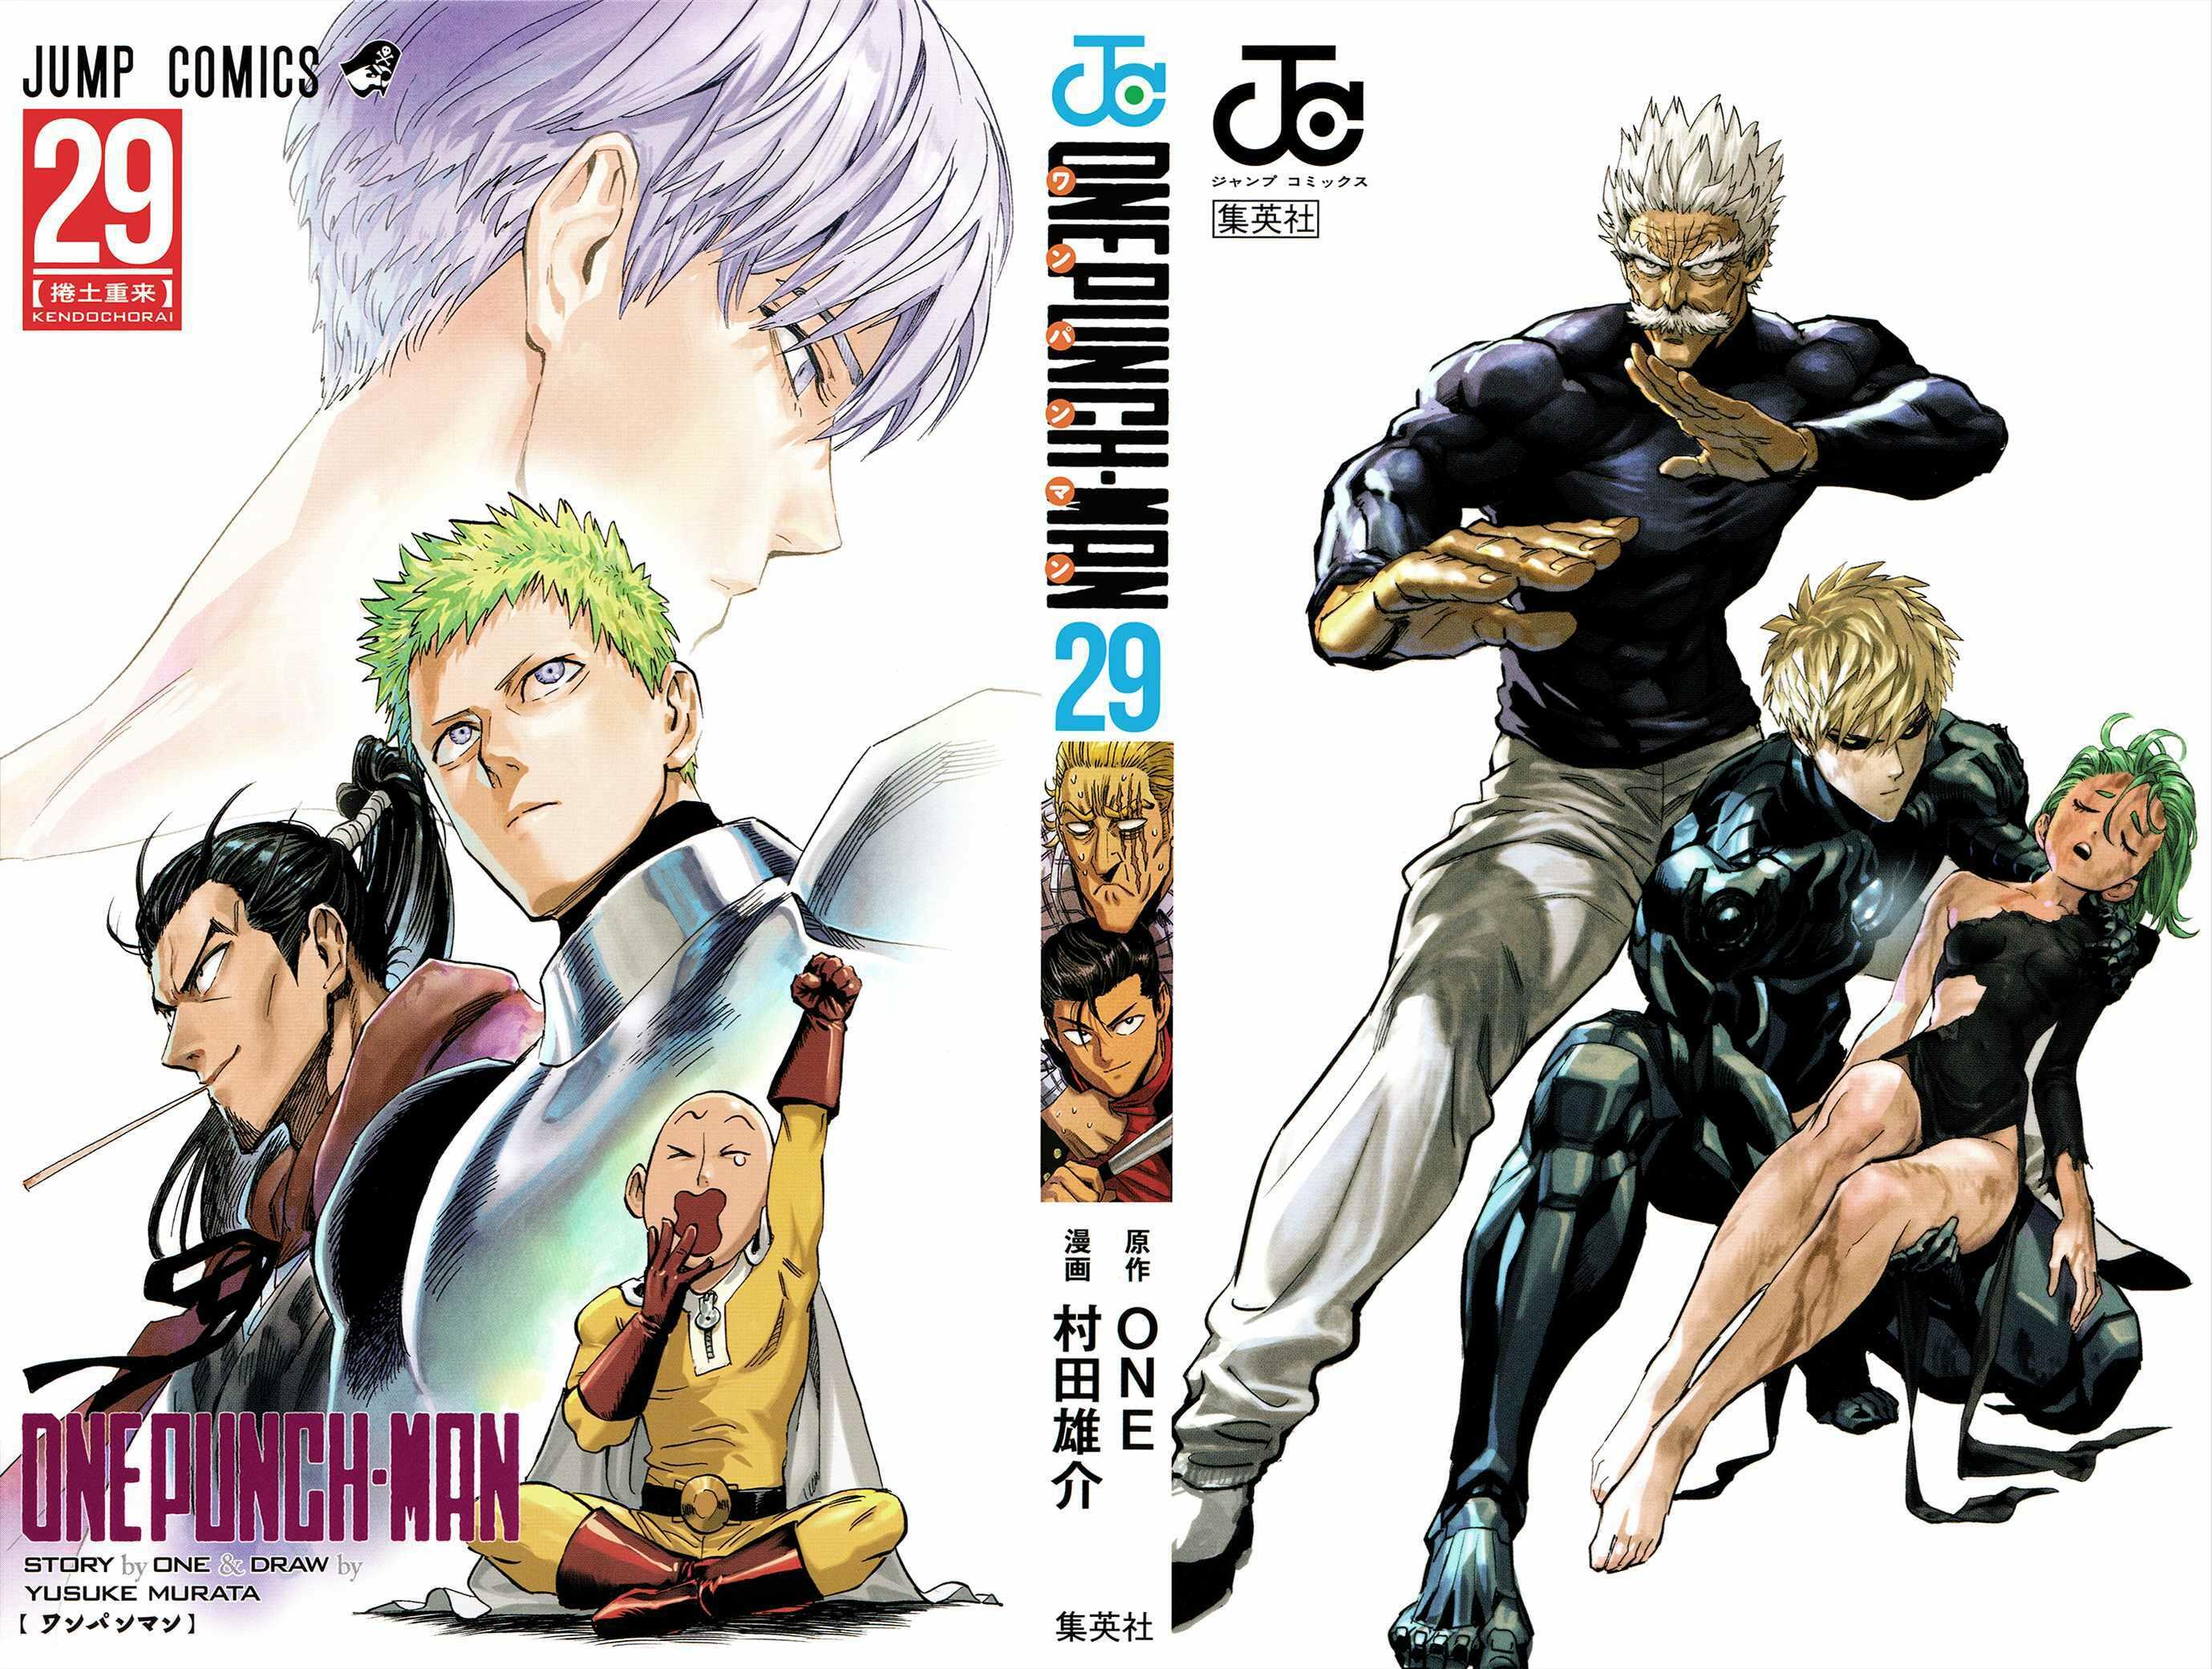 Garou - One Punch Man Capítulo 122 Manga  One punch man anime, One punch  man manga, One punch man